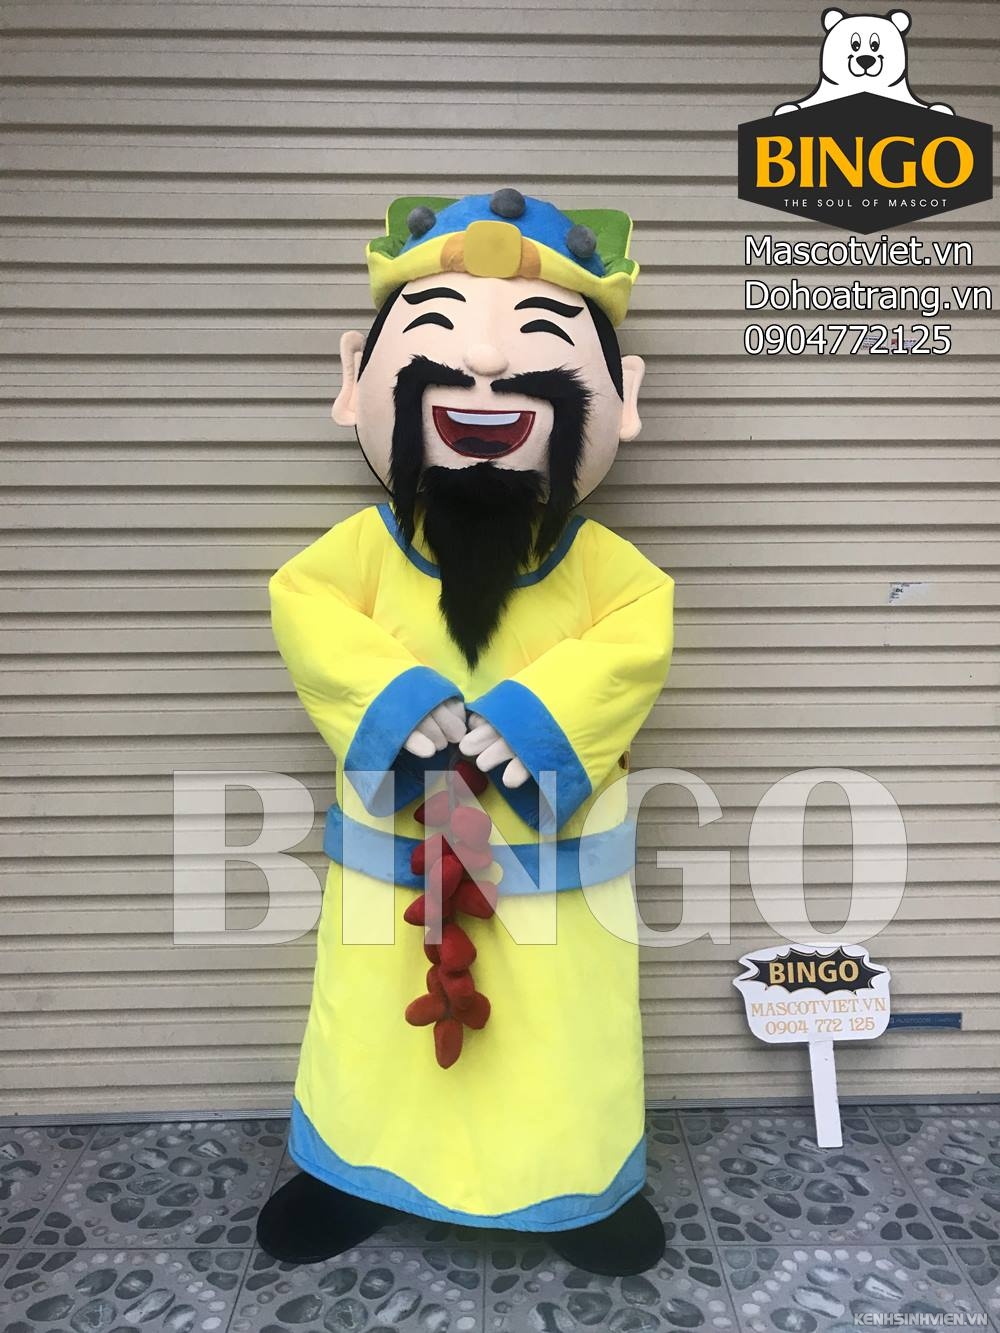 mascot-ong-phuc-bingo-costumes-0904772125.jpg